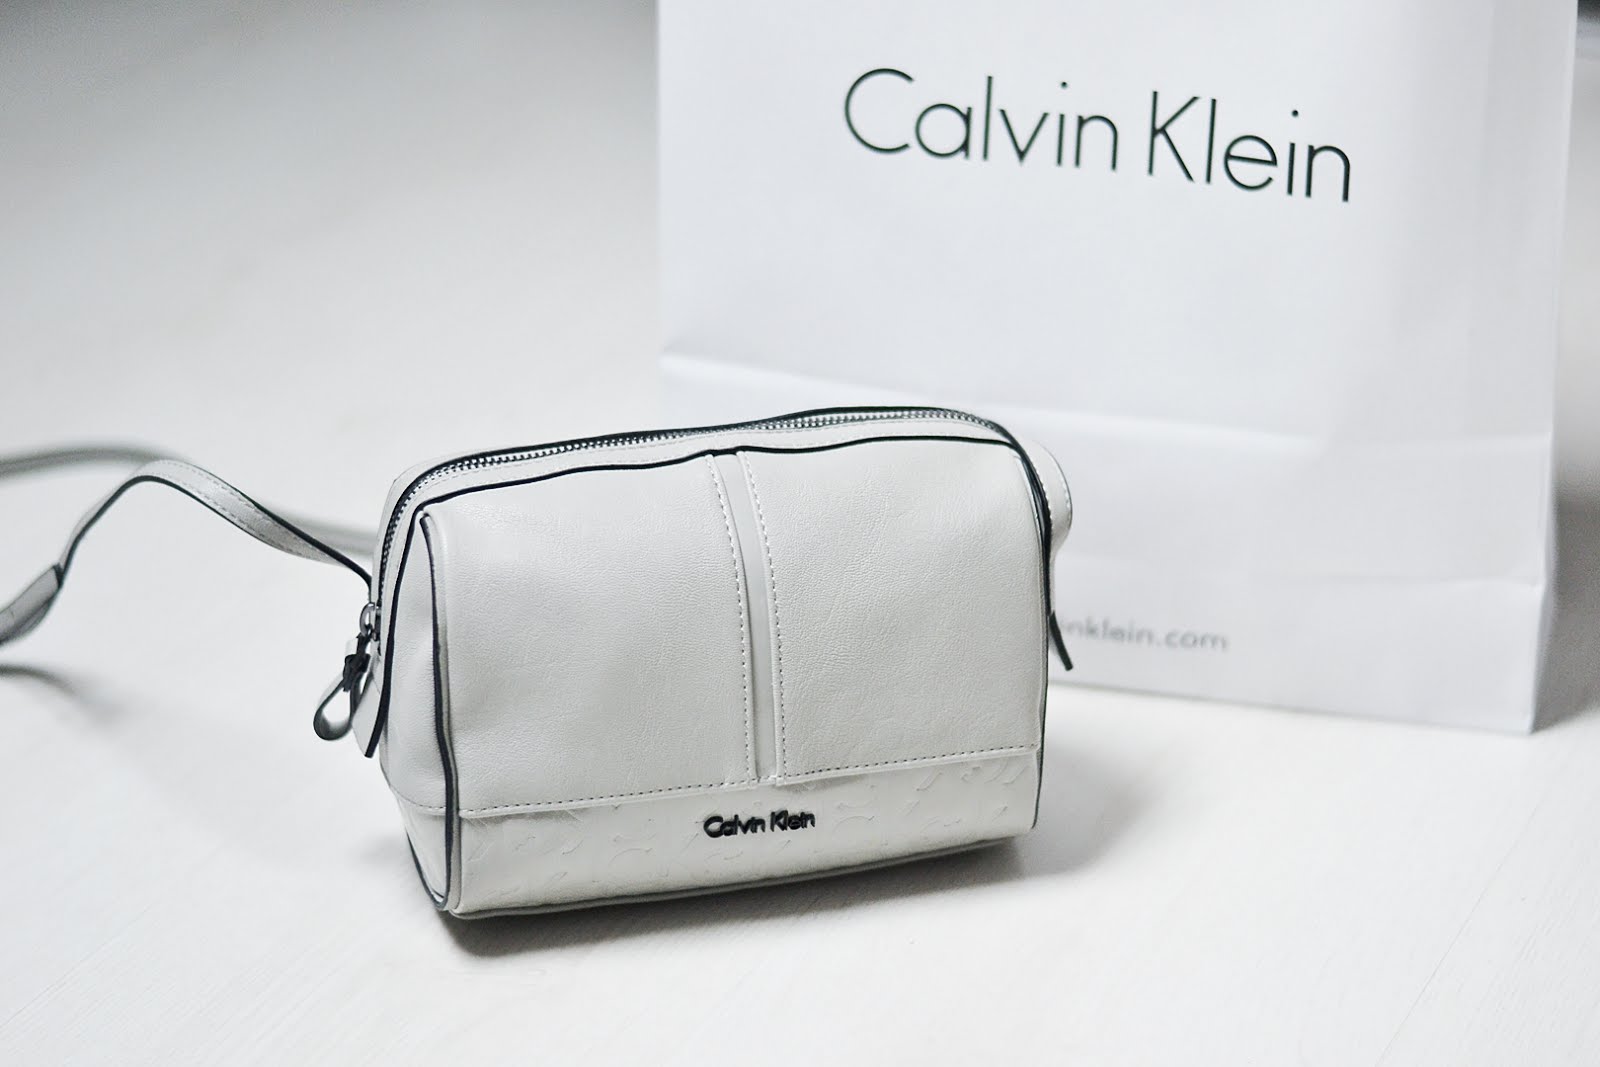 Calvin Klein bag, small, grey, basic, minimalistic, maasmechelen village, sjiek shopping days, belgian blogger